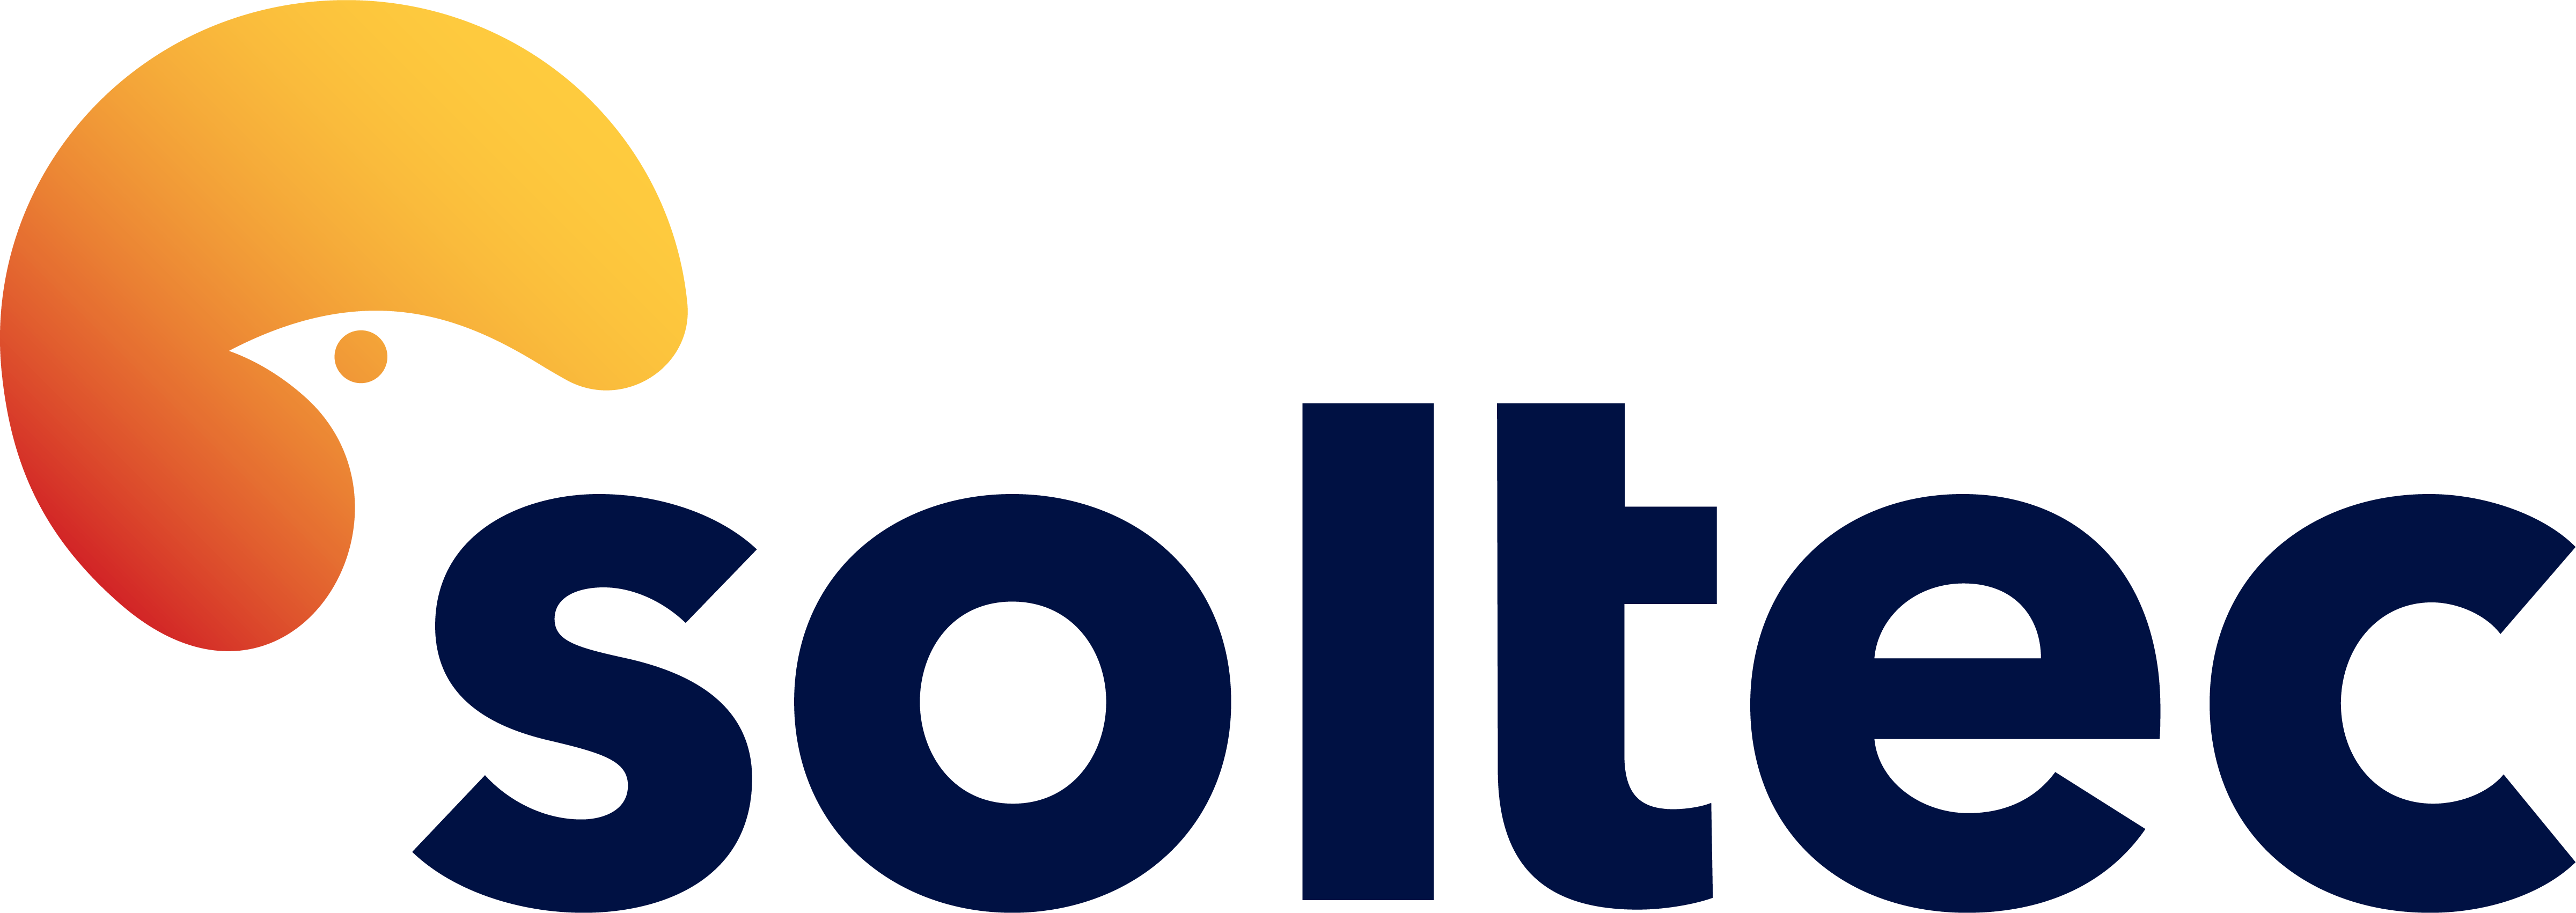 Nuevo Logo Soltec Horizontal RGB - GR-BLUE